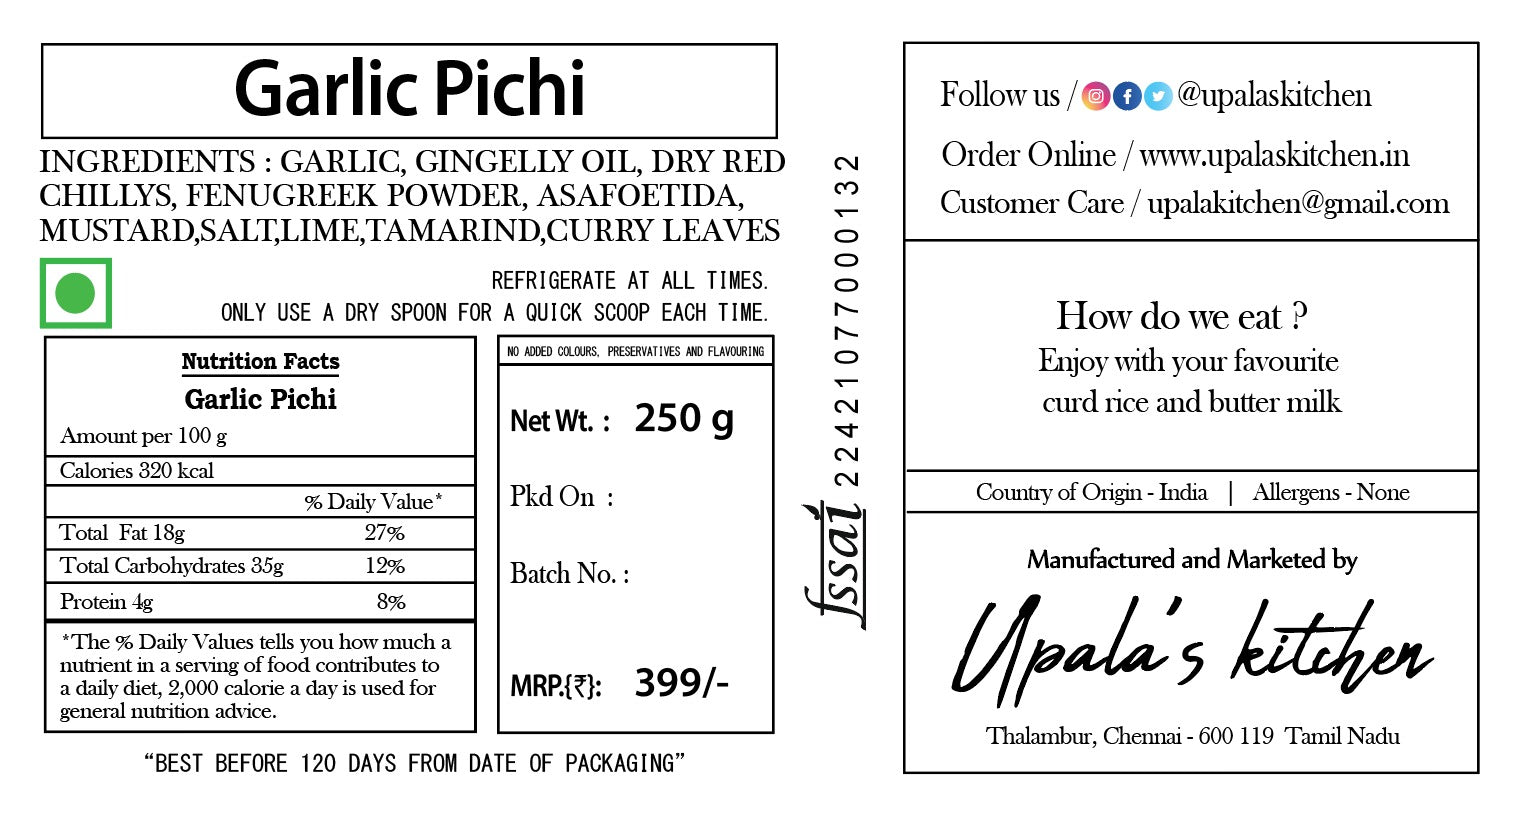 Garlic Picchi - Mad Over Garlic - Upala's Kitchen